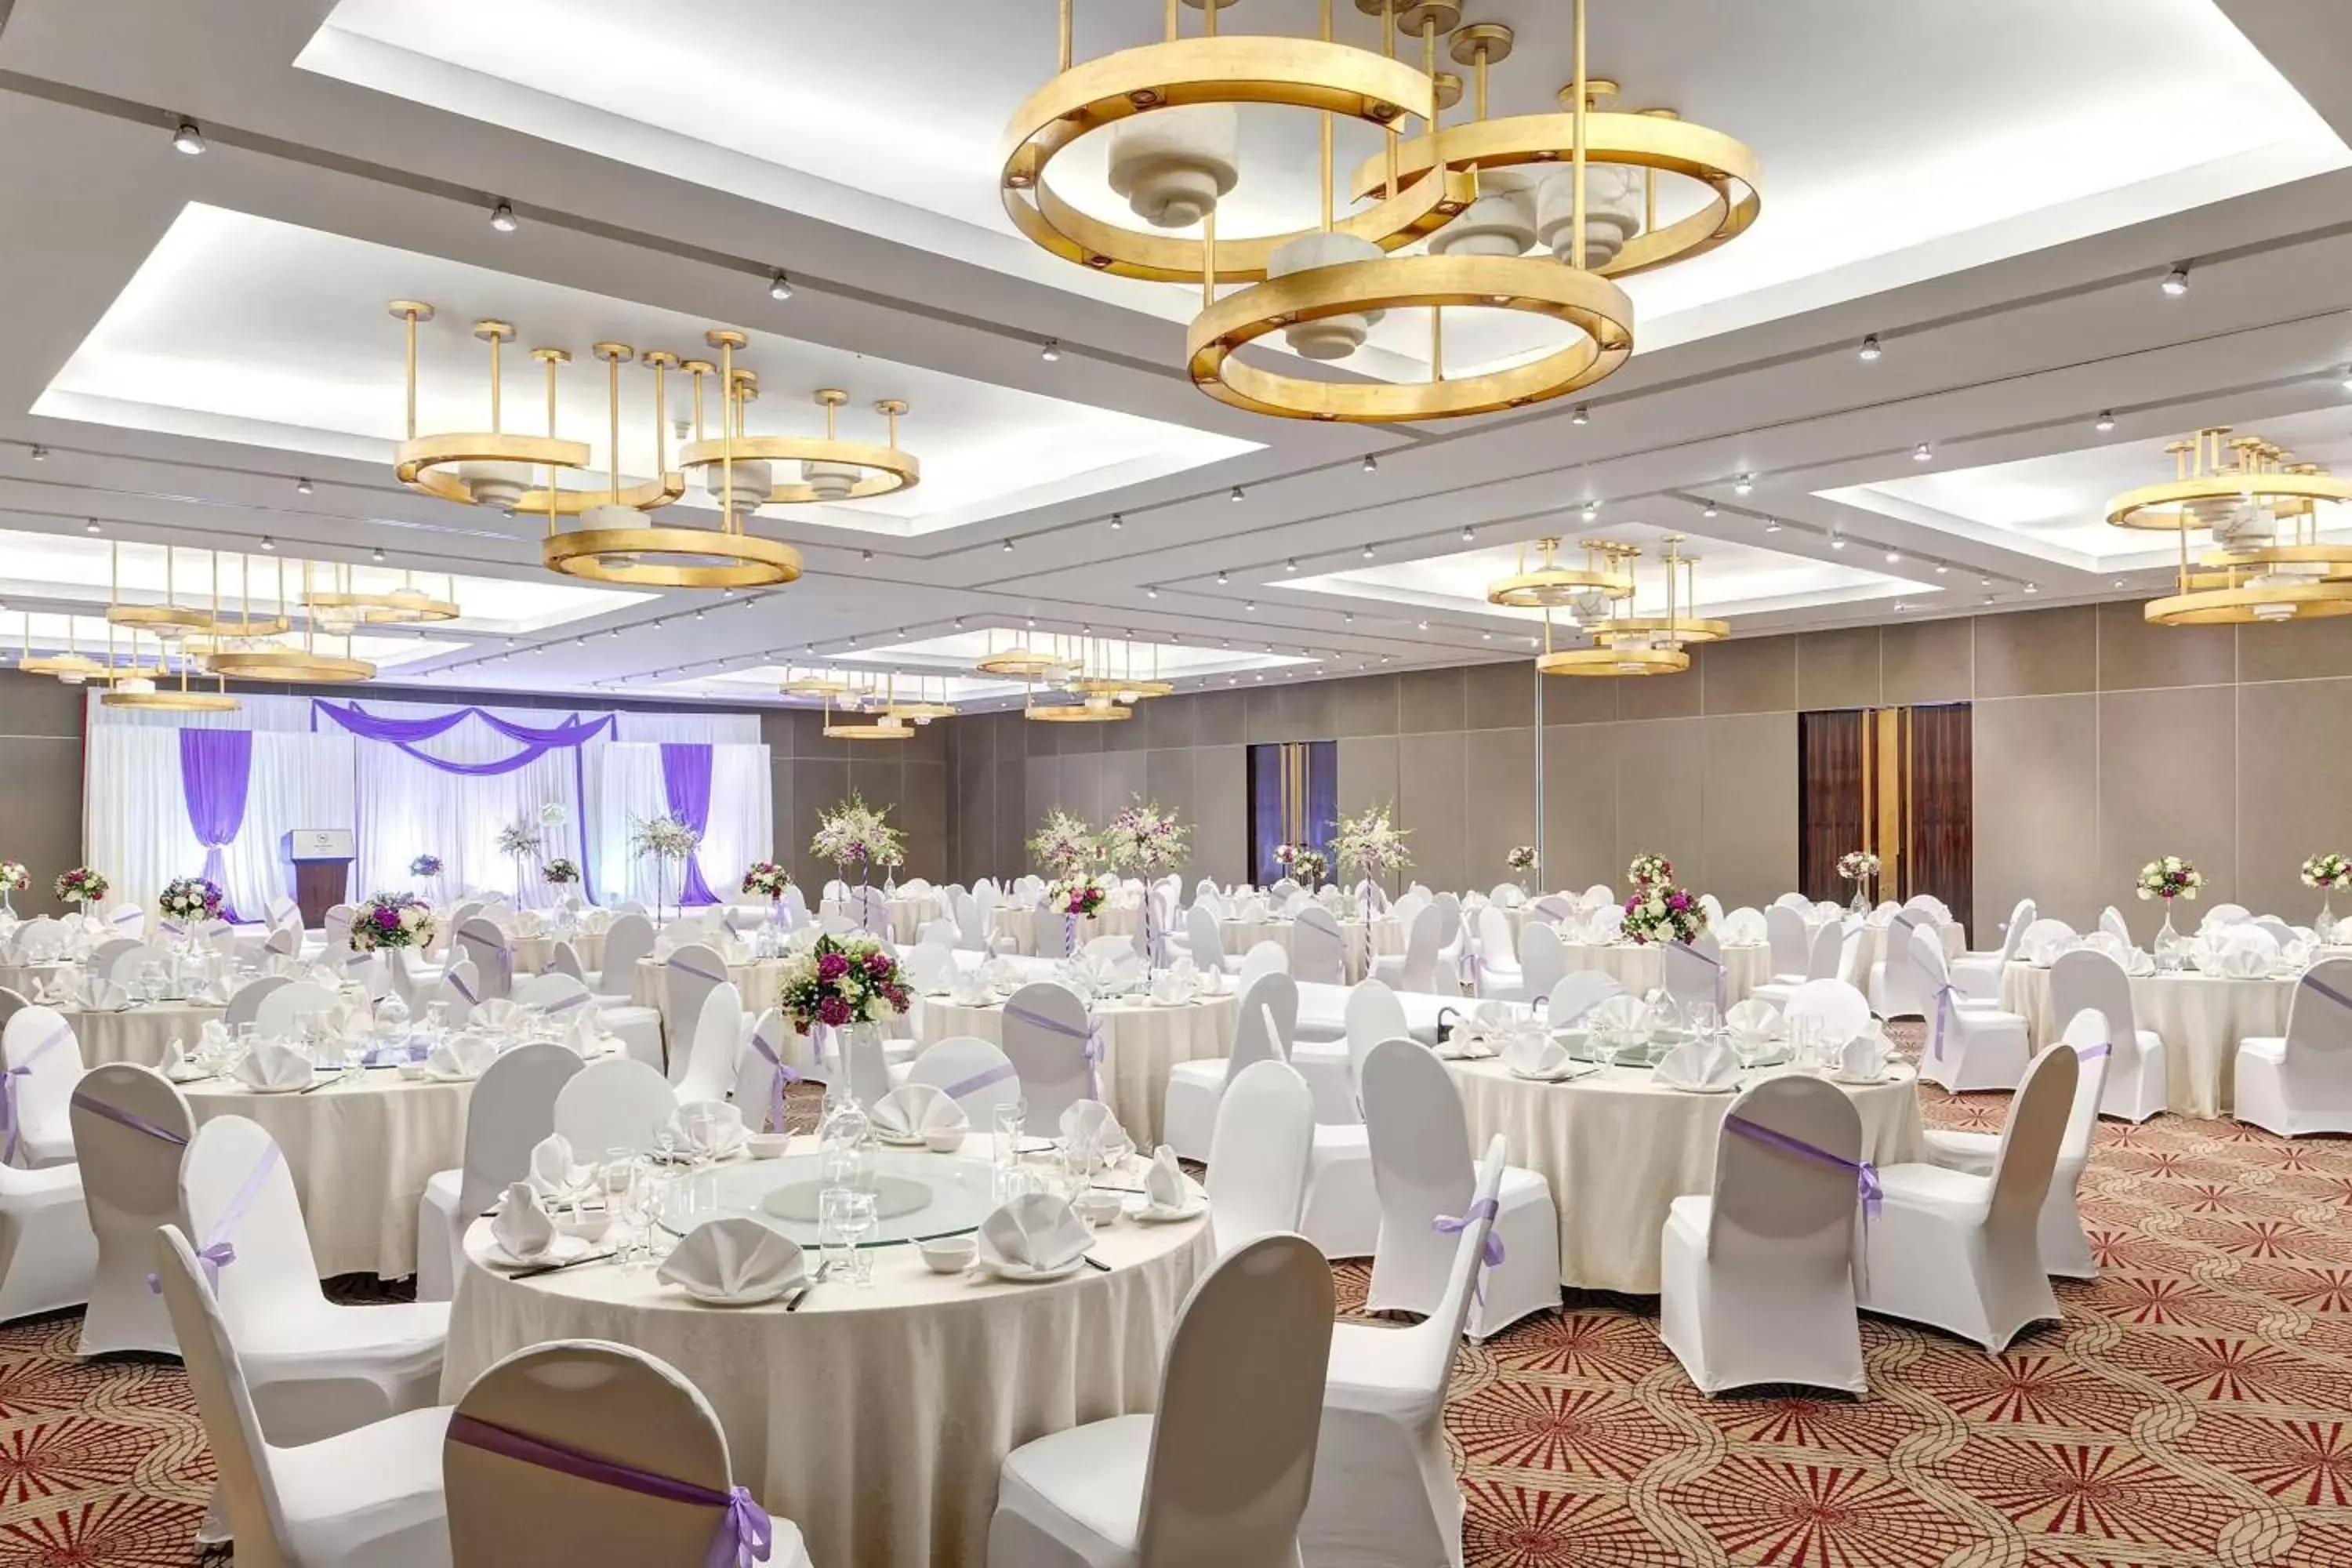 Banquet/Function facilities, Banquet Facilities in Sheraton Xi'an Hotel